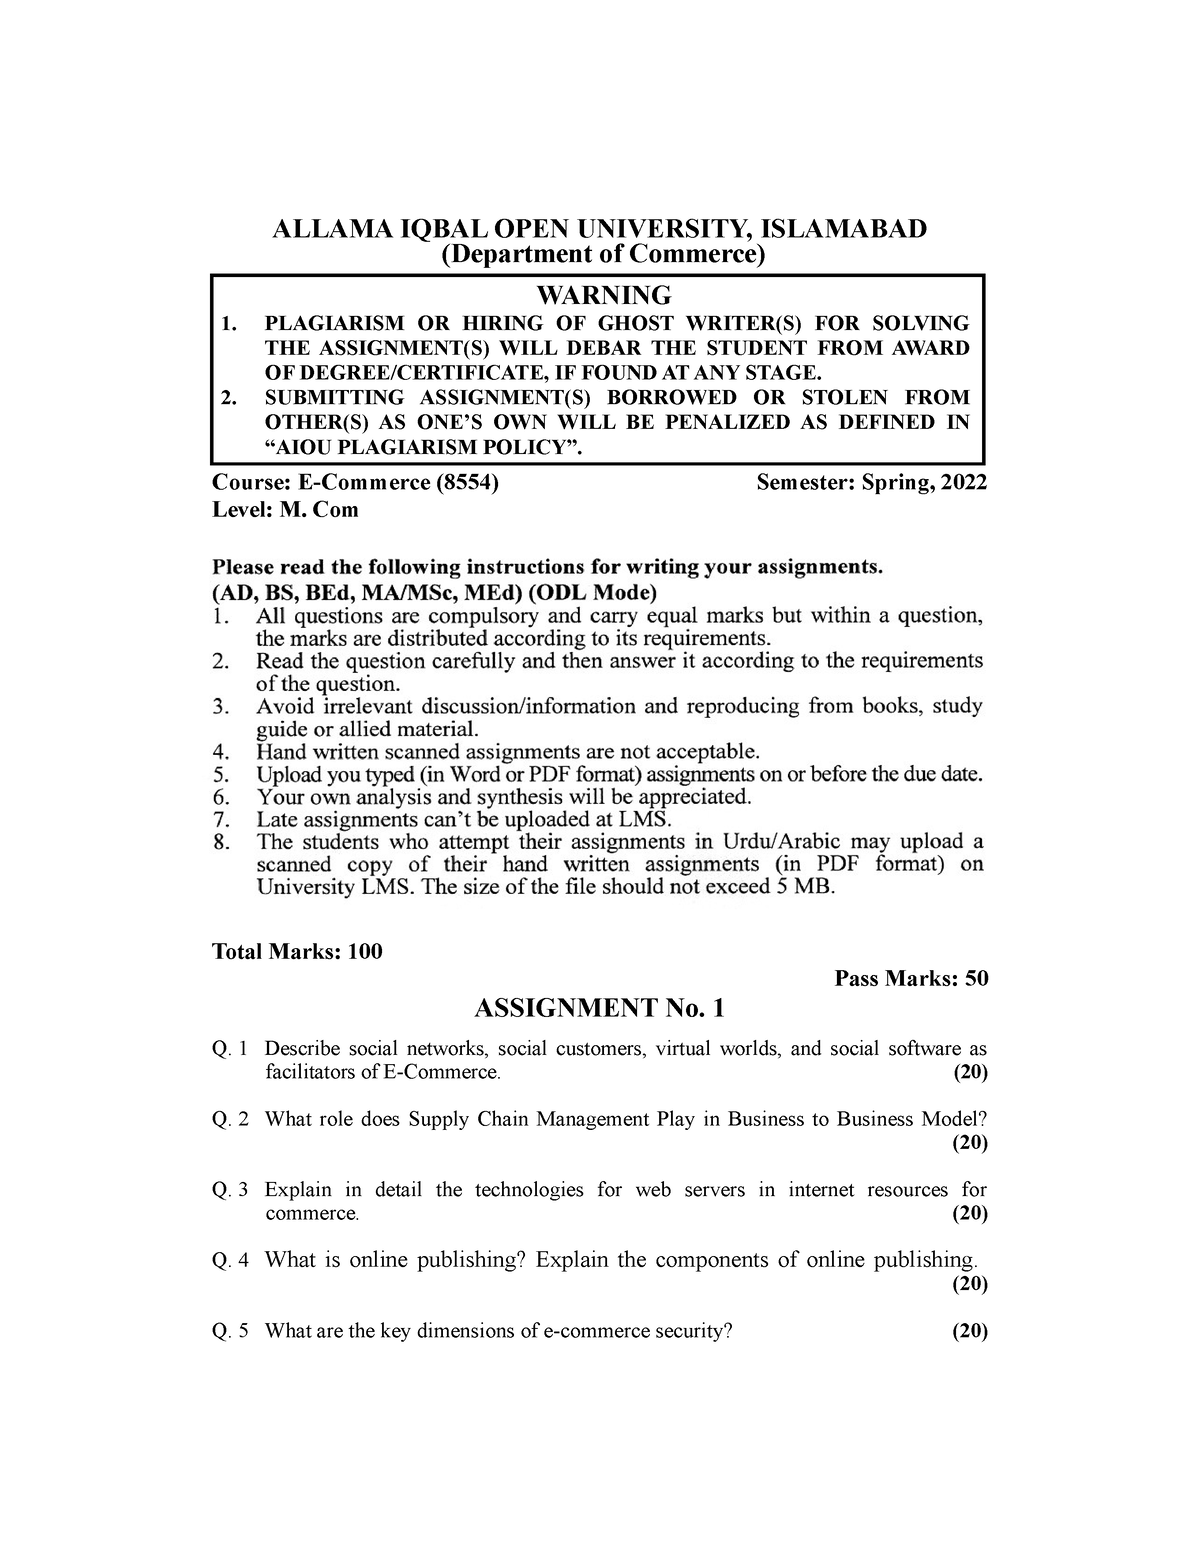 allama iqbal open university islamabad assignment